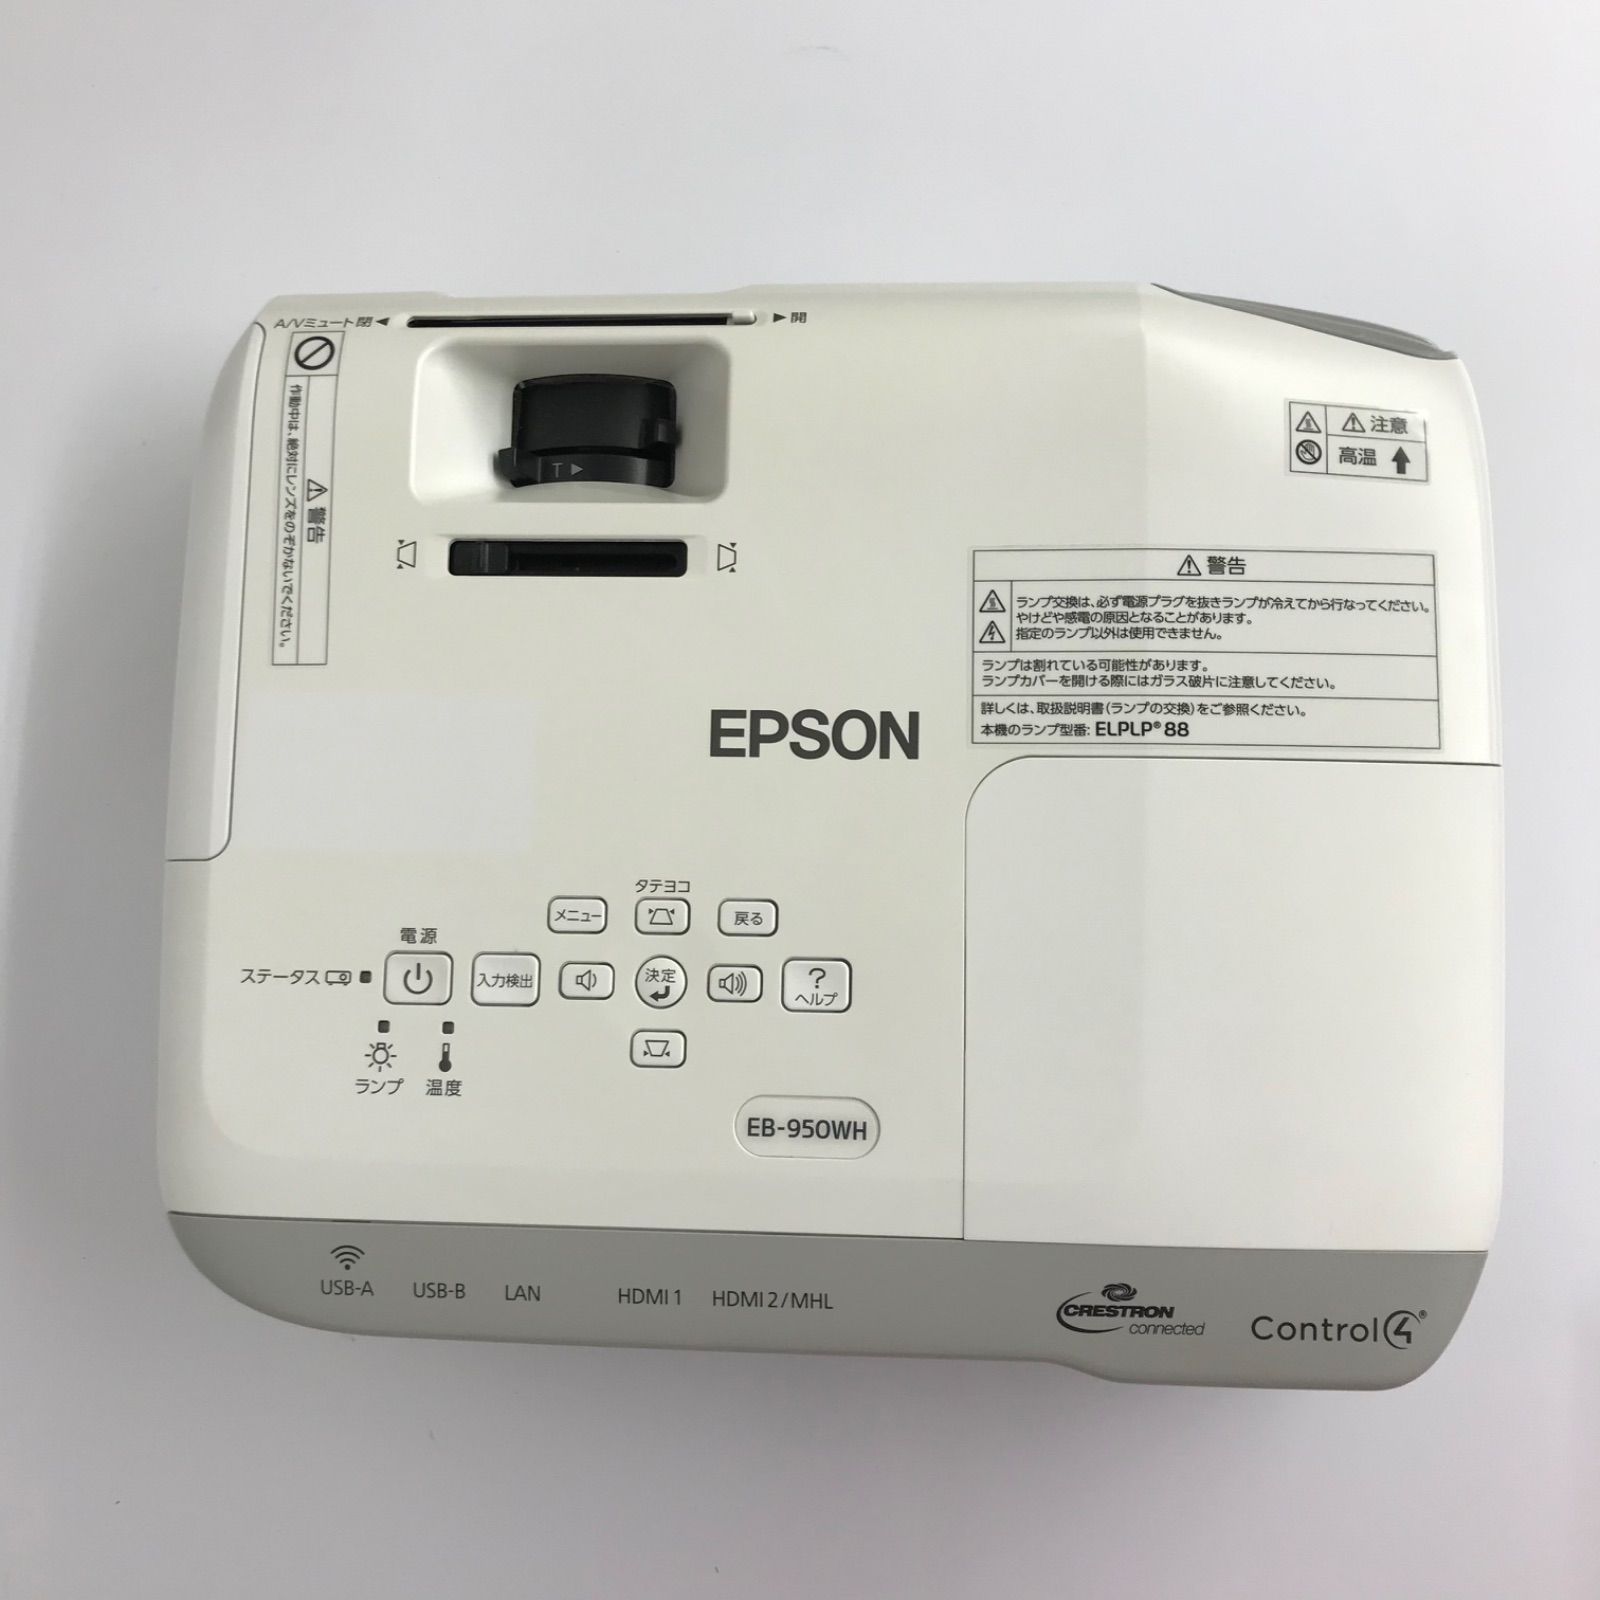 EPSON プロジェクター EB-950WH - 中古パソコン販売パクス - メルカリ